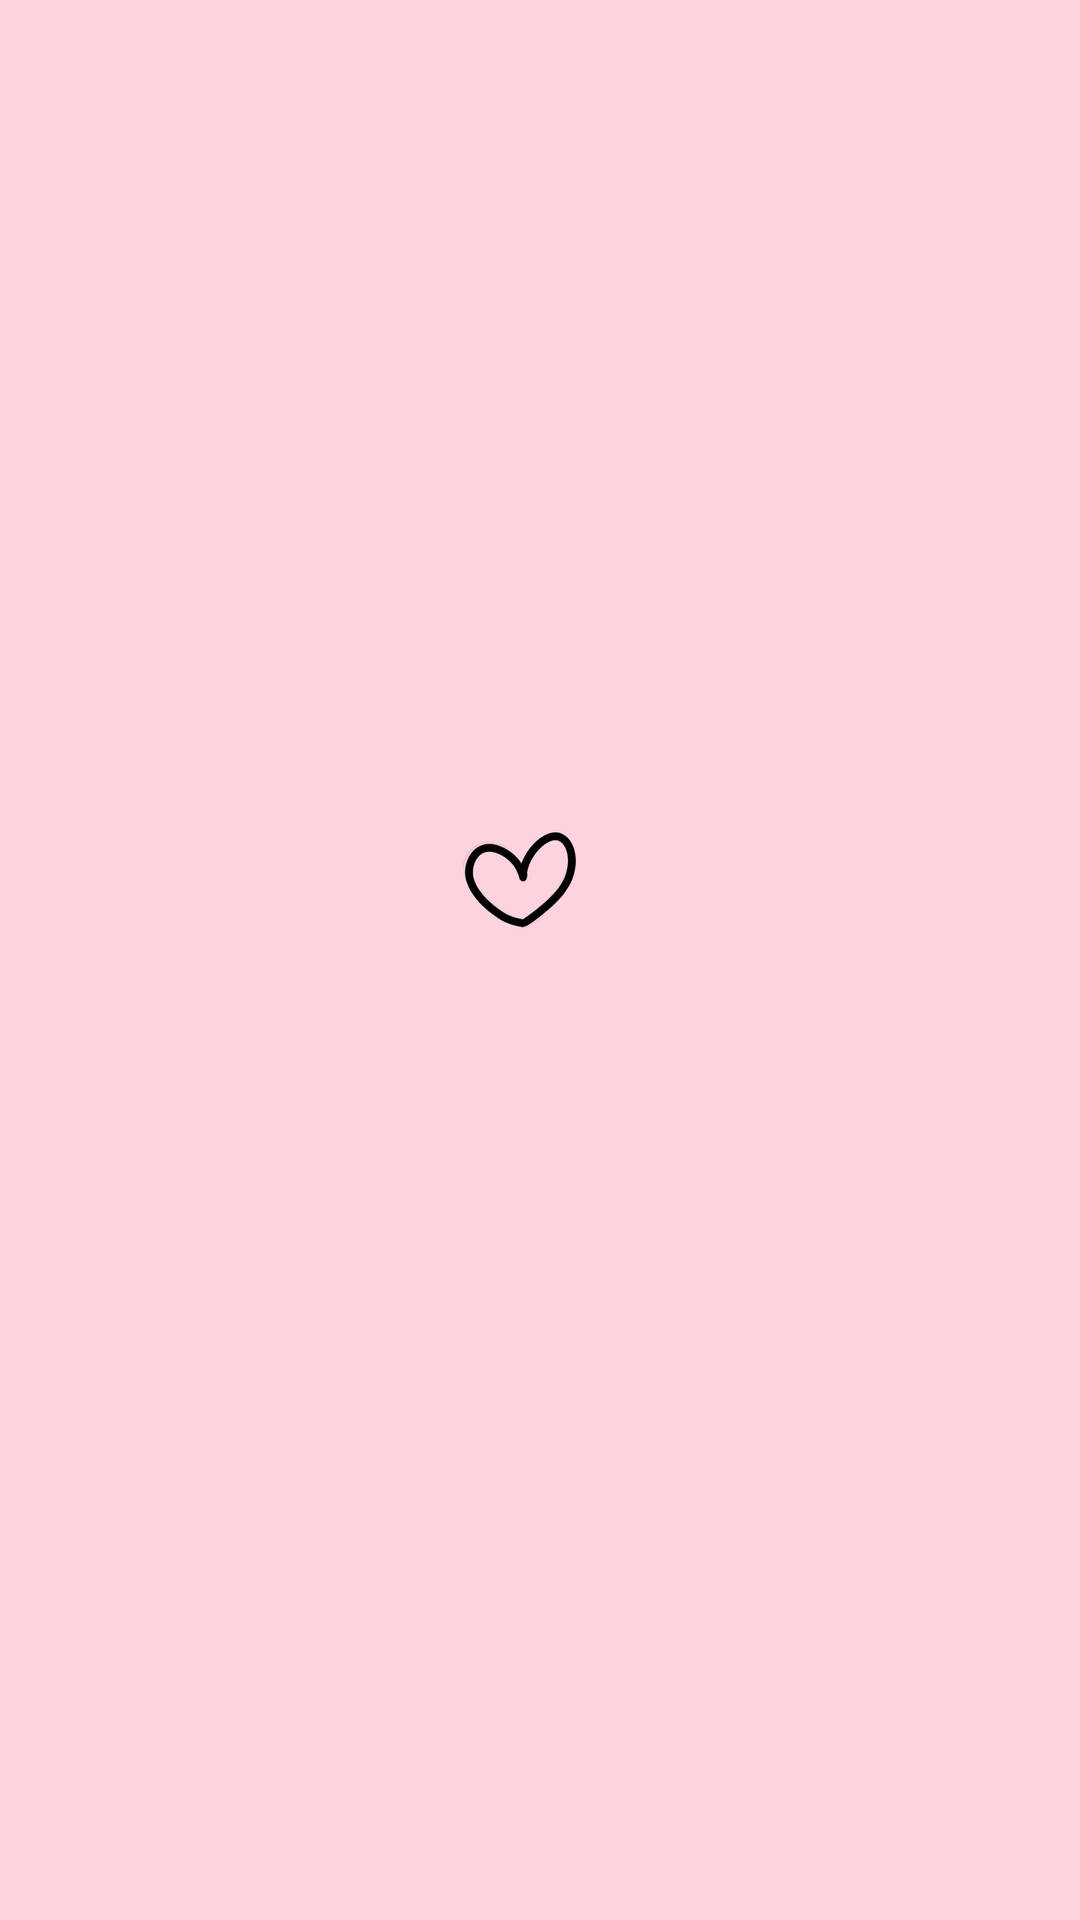 Cute Pink Aesthetic Heart Wallpaper